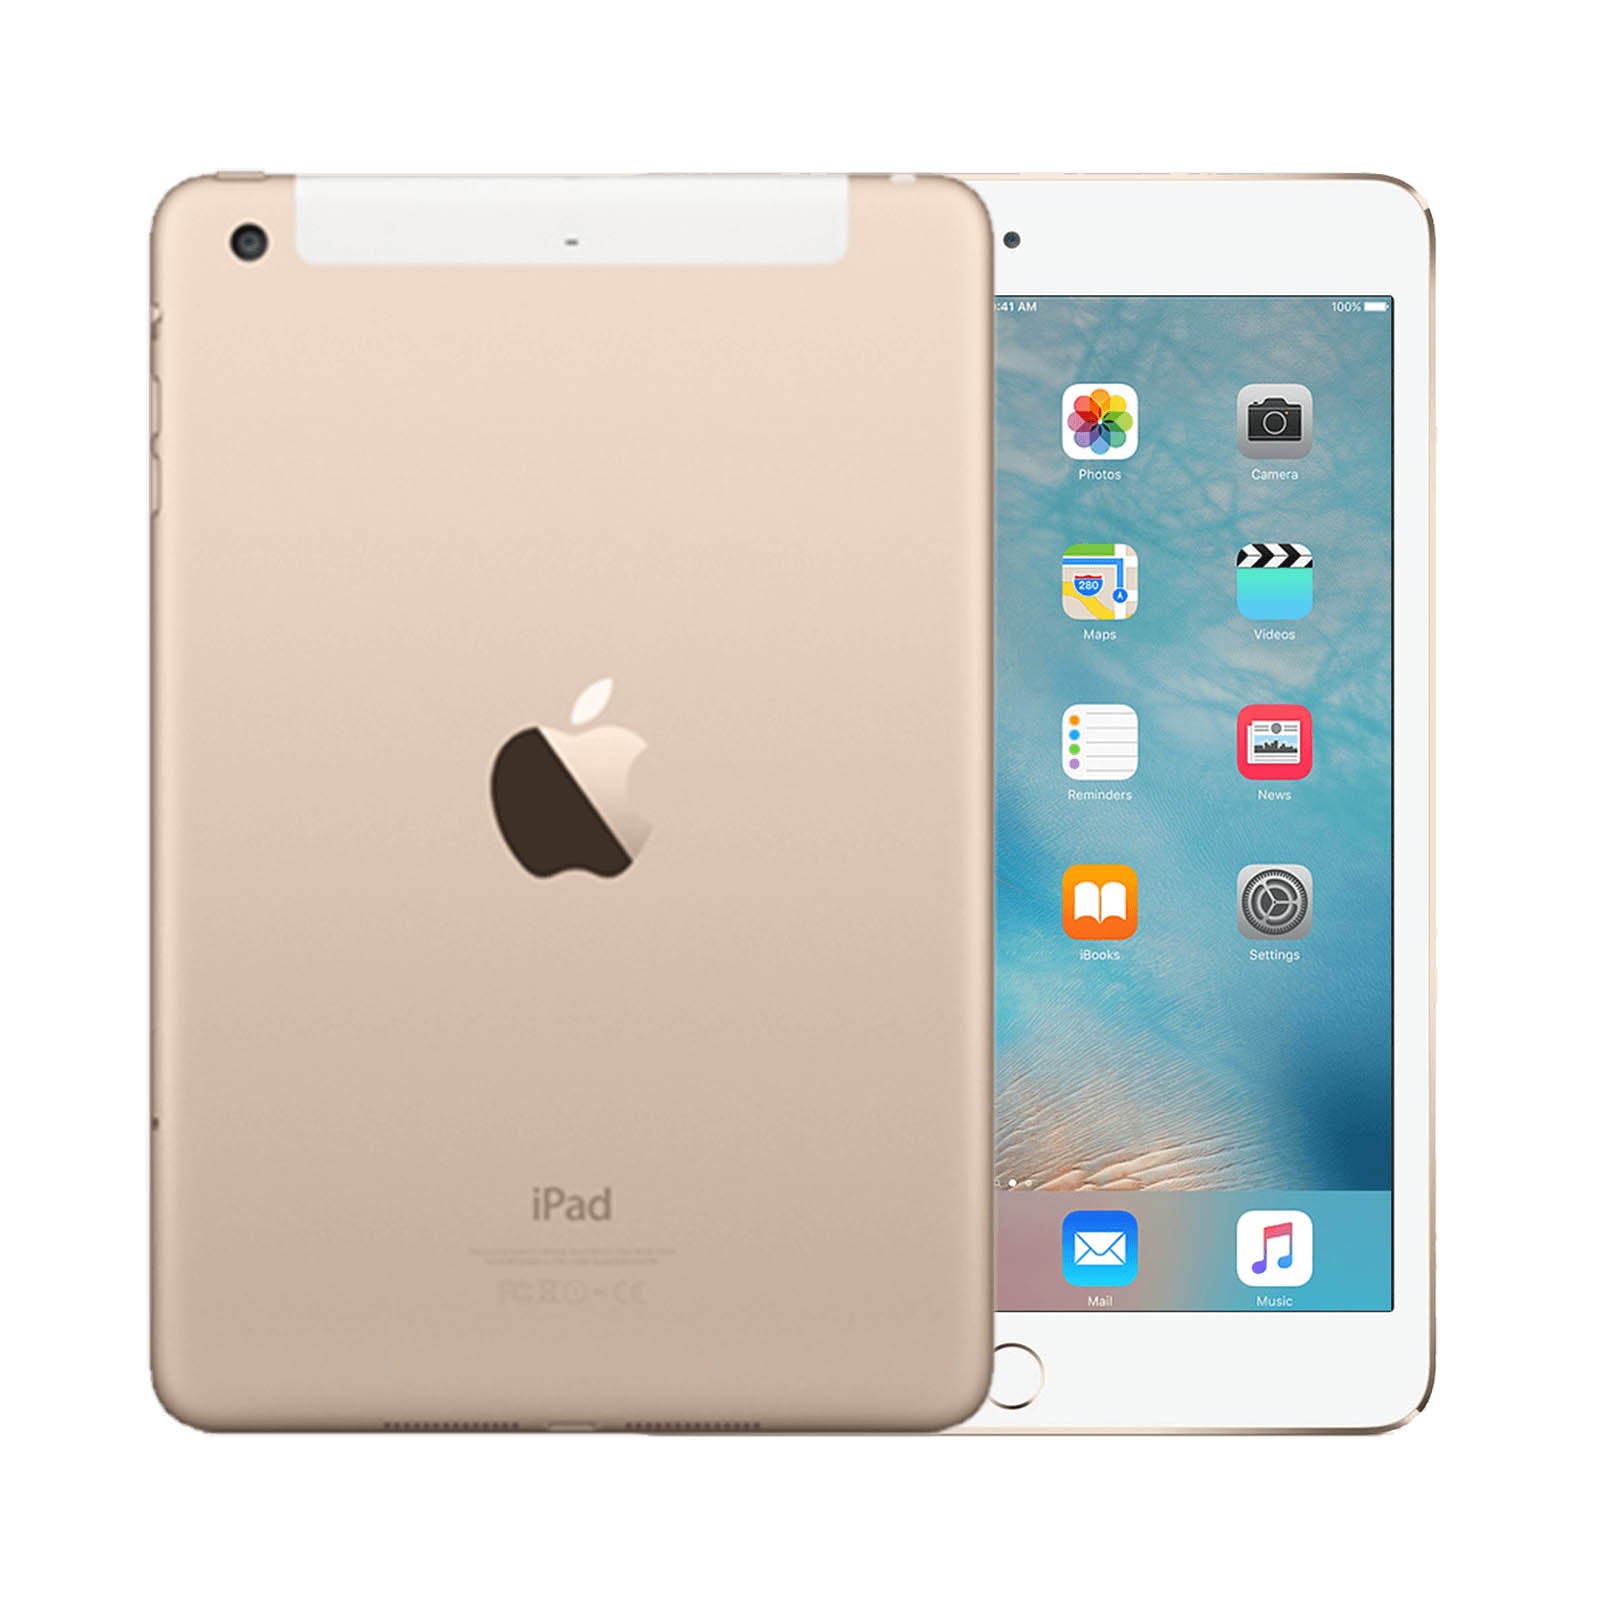 Apple iPad mini 3 16GB Gold Very Good- Unlocked